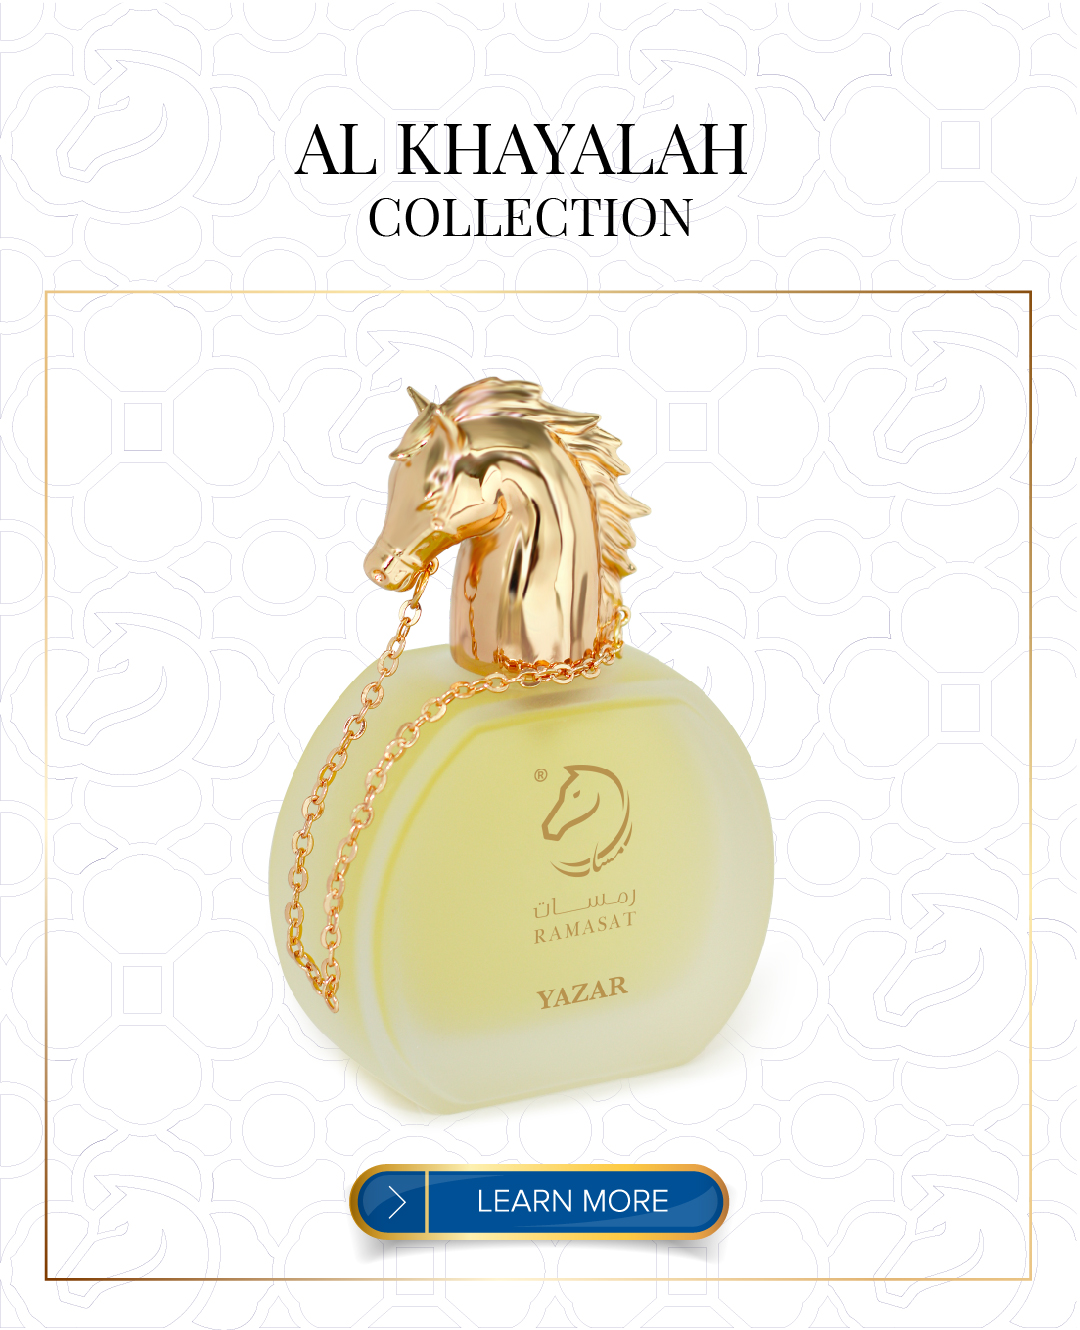 Luxury Niche Perfume From Ramasat | Buy Niche Perfume Online